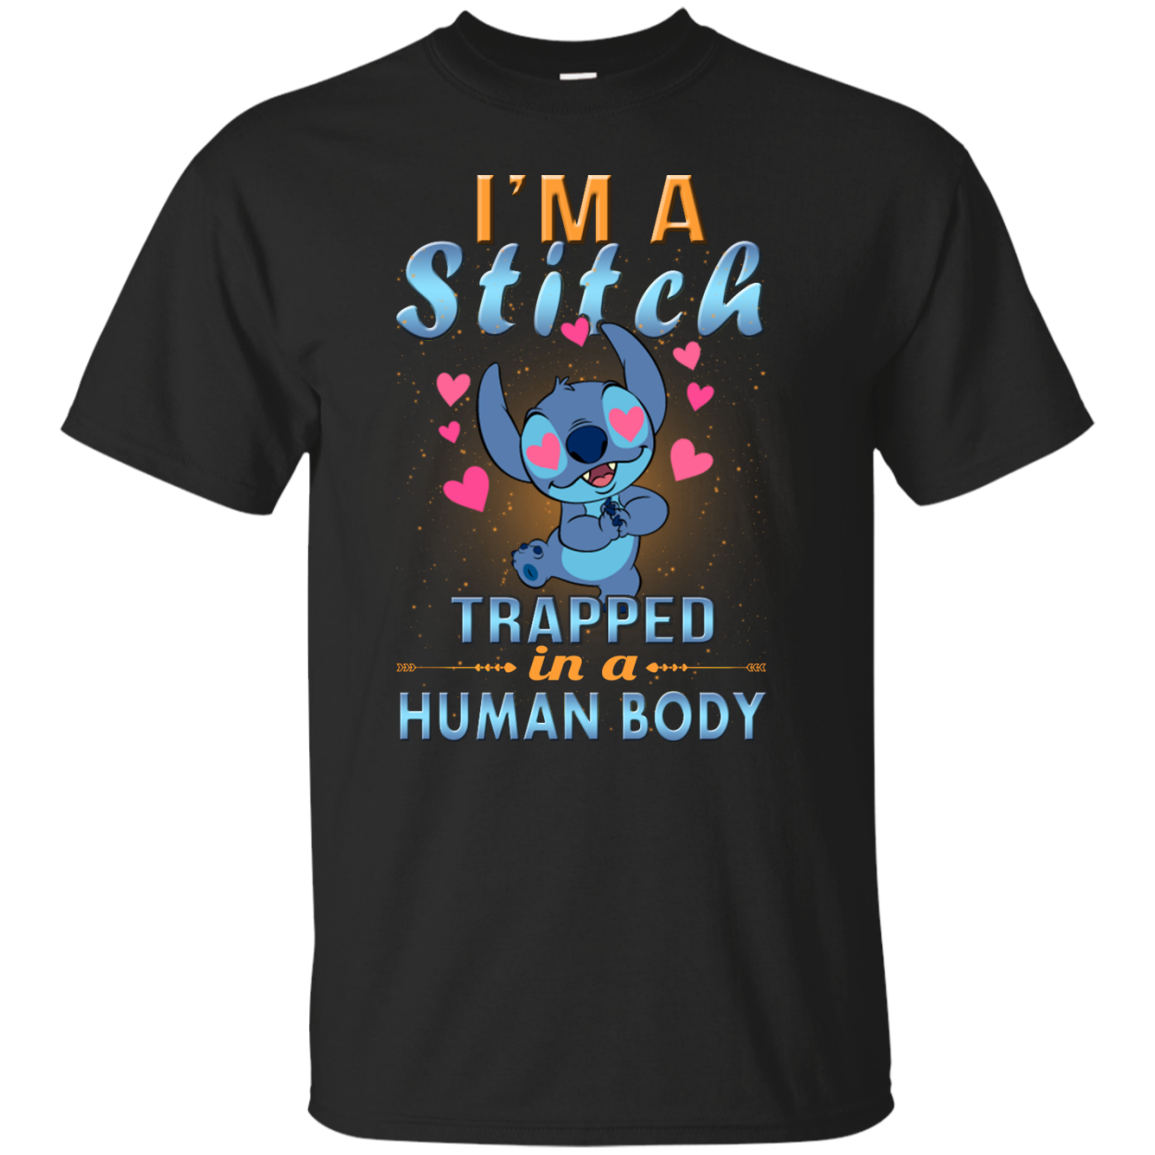 I'm A Stitch Trapped In A Human Body shirt, tank, sweater